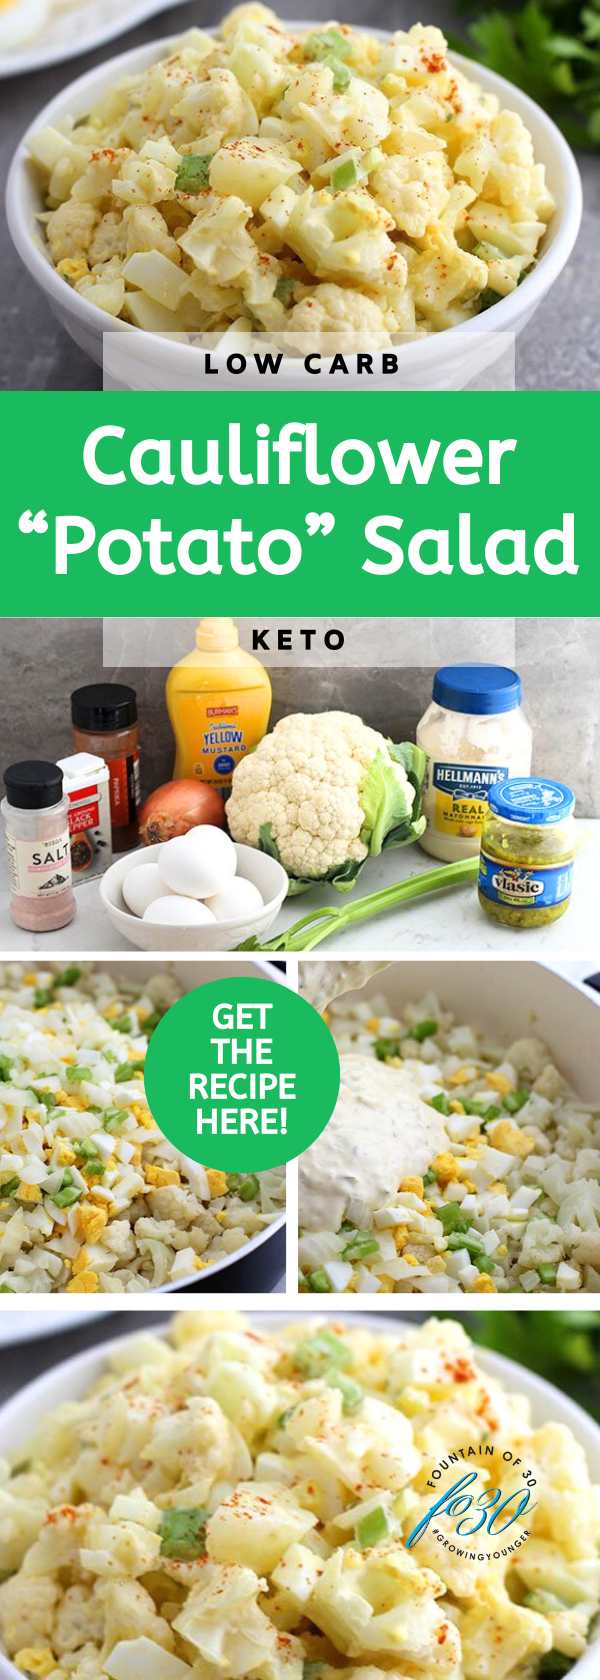 how to make potato salad with cauliflower low carb recipe fountainof30